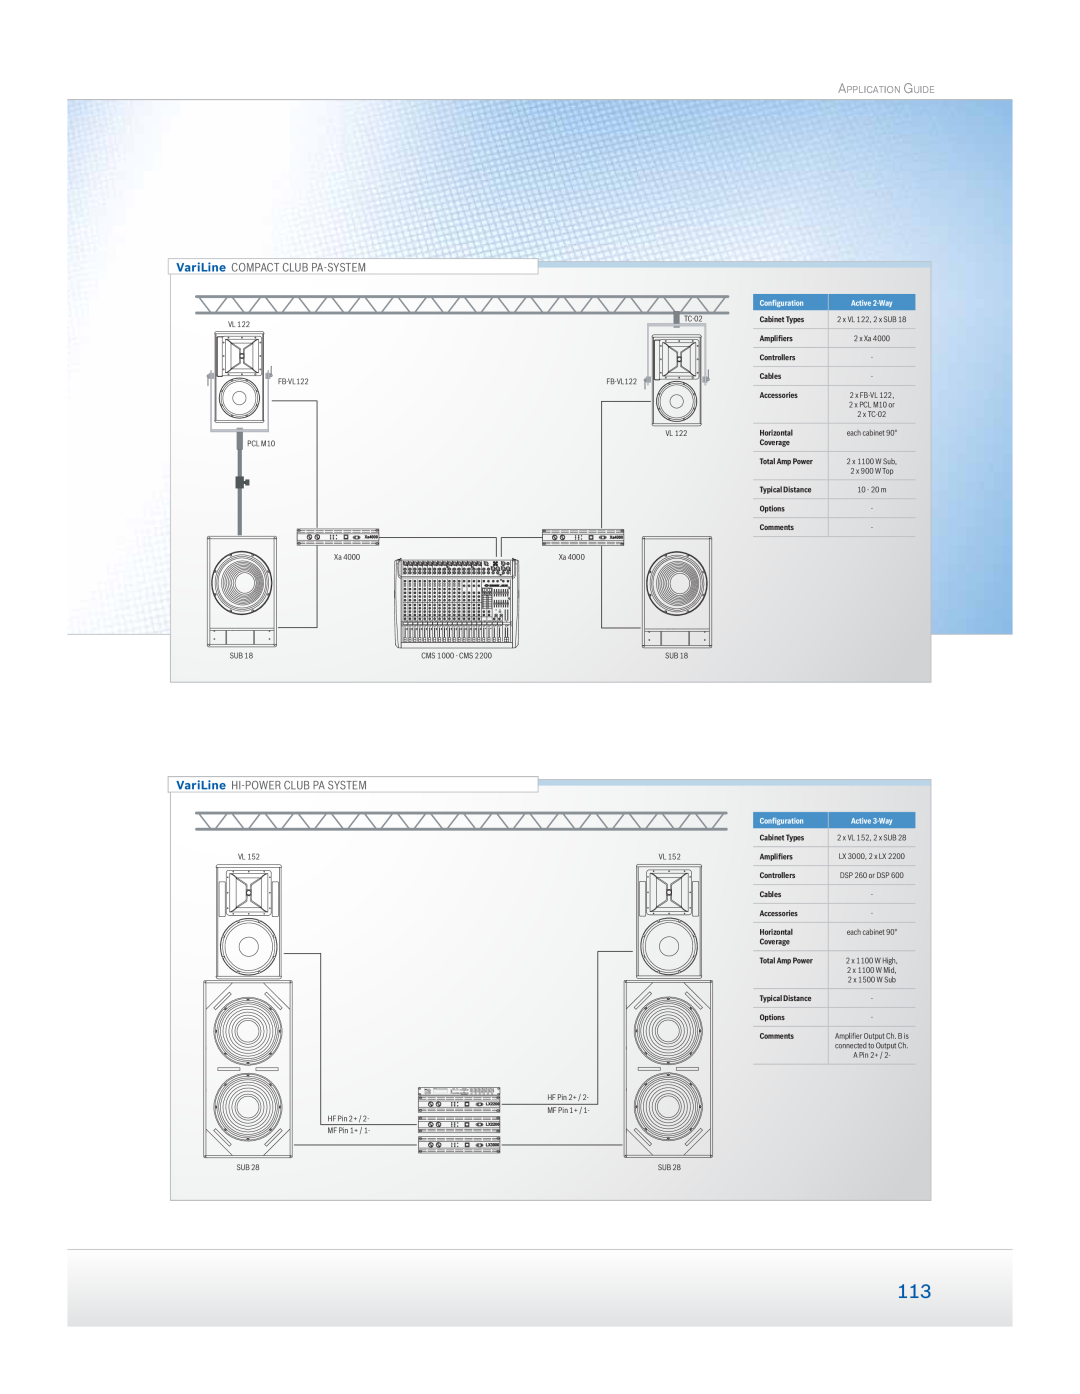 Dynacord Speaker manual VariLine COMPACT CLUB PA-SYSTEM, VariLine HI-POWERCLUB PA SYSTEM, Application Guide, Conﬁguration 